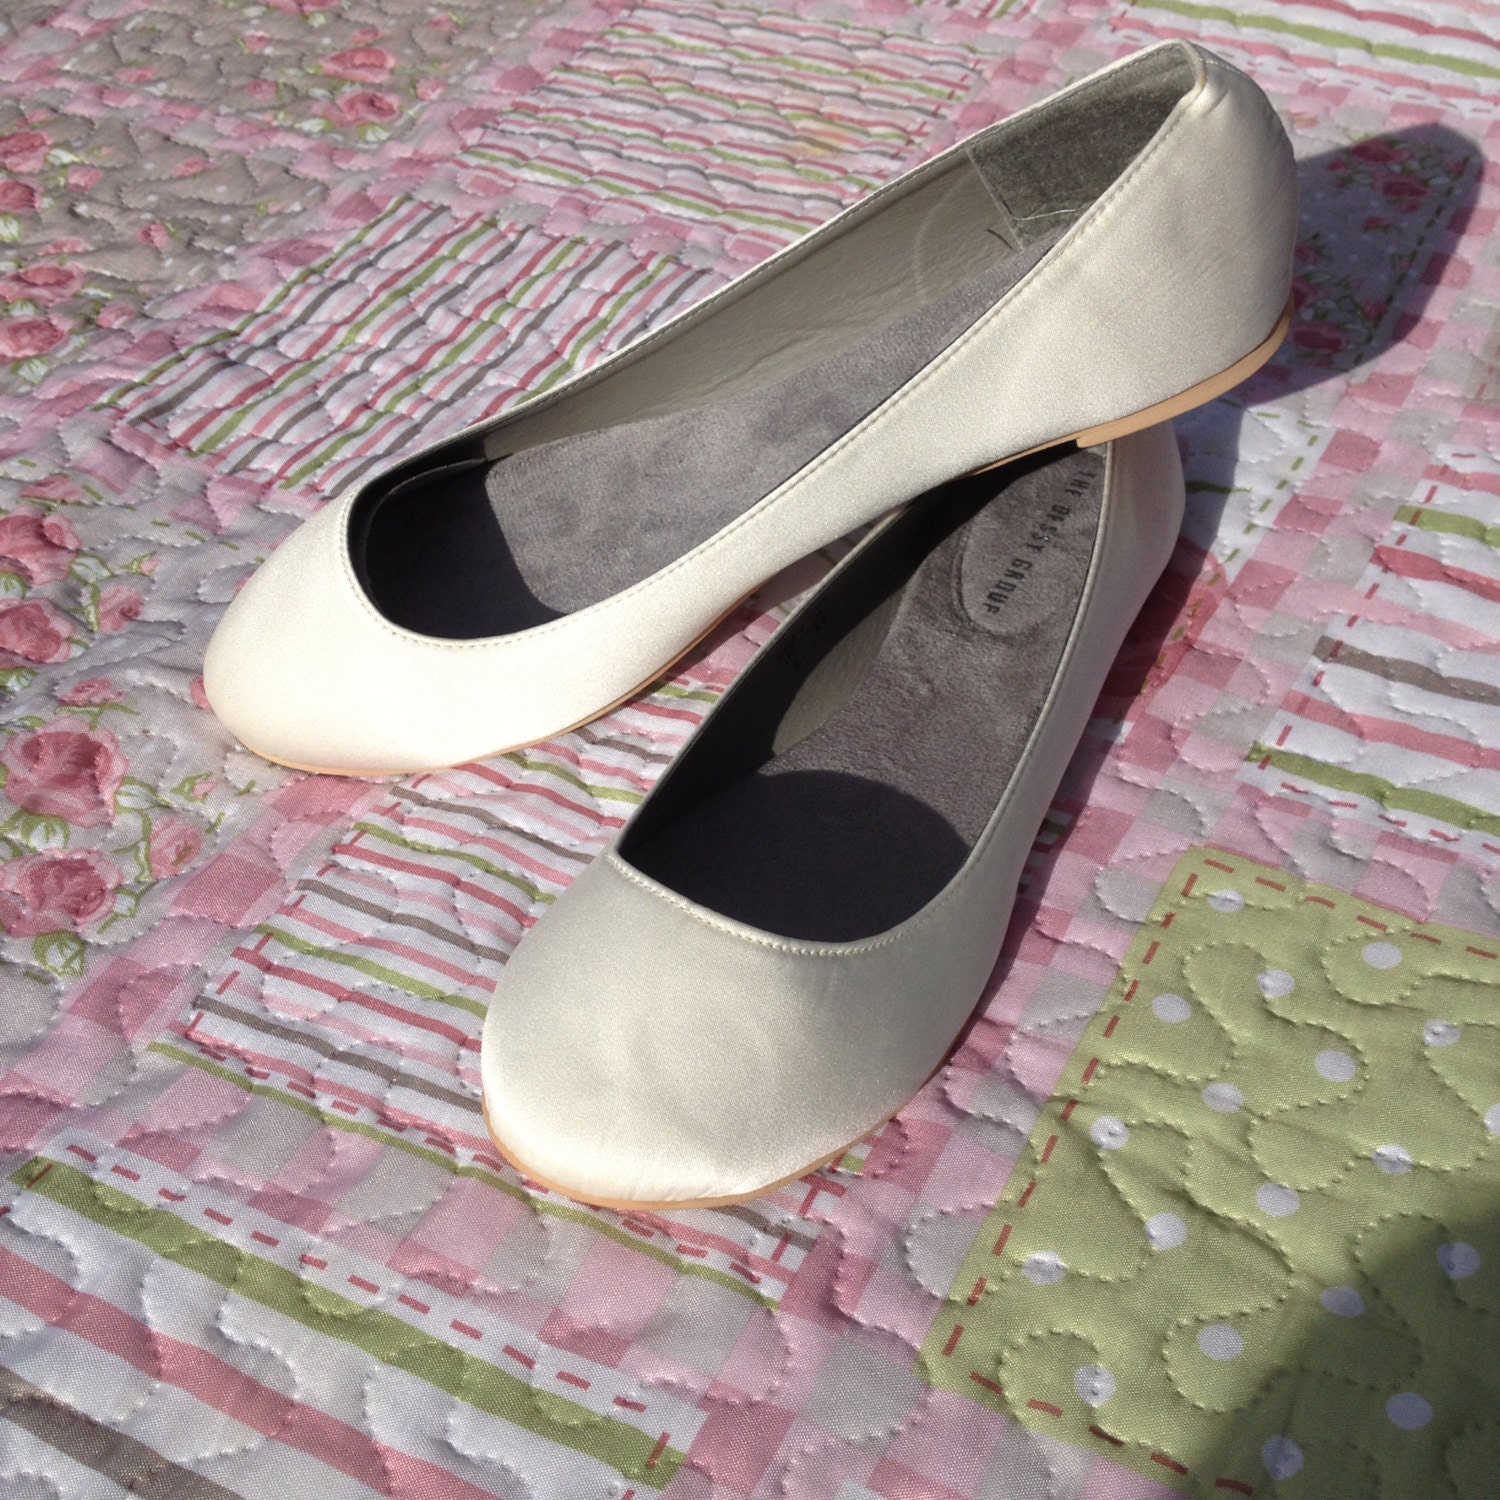 Cream Satin Wedding Ballet Flats Shoes size UK 6.5 available